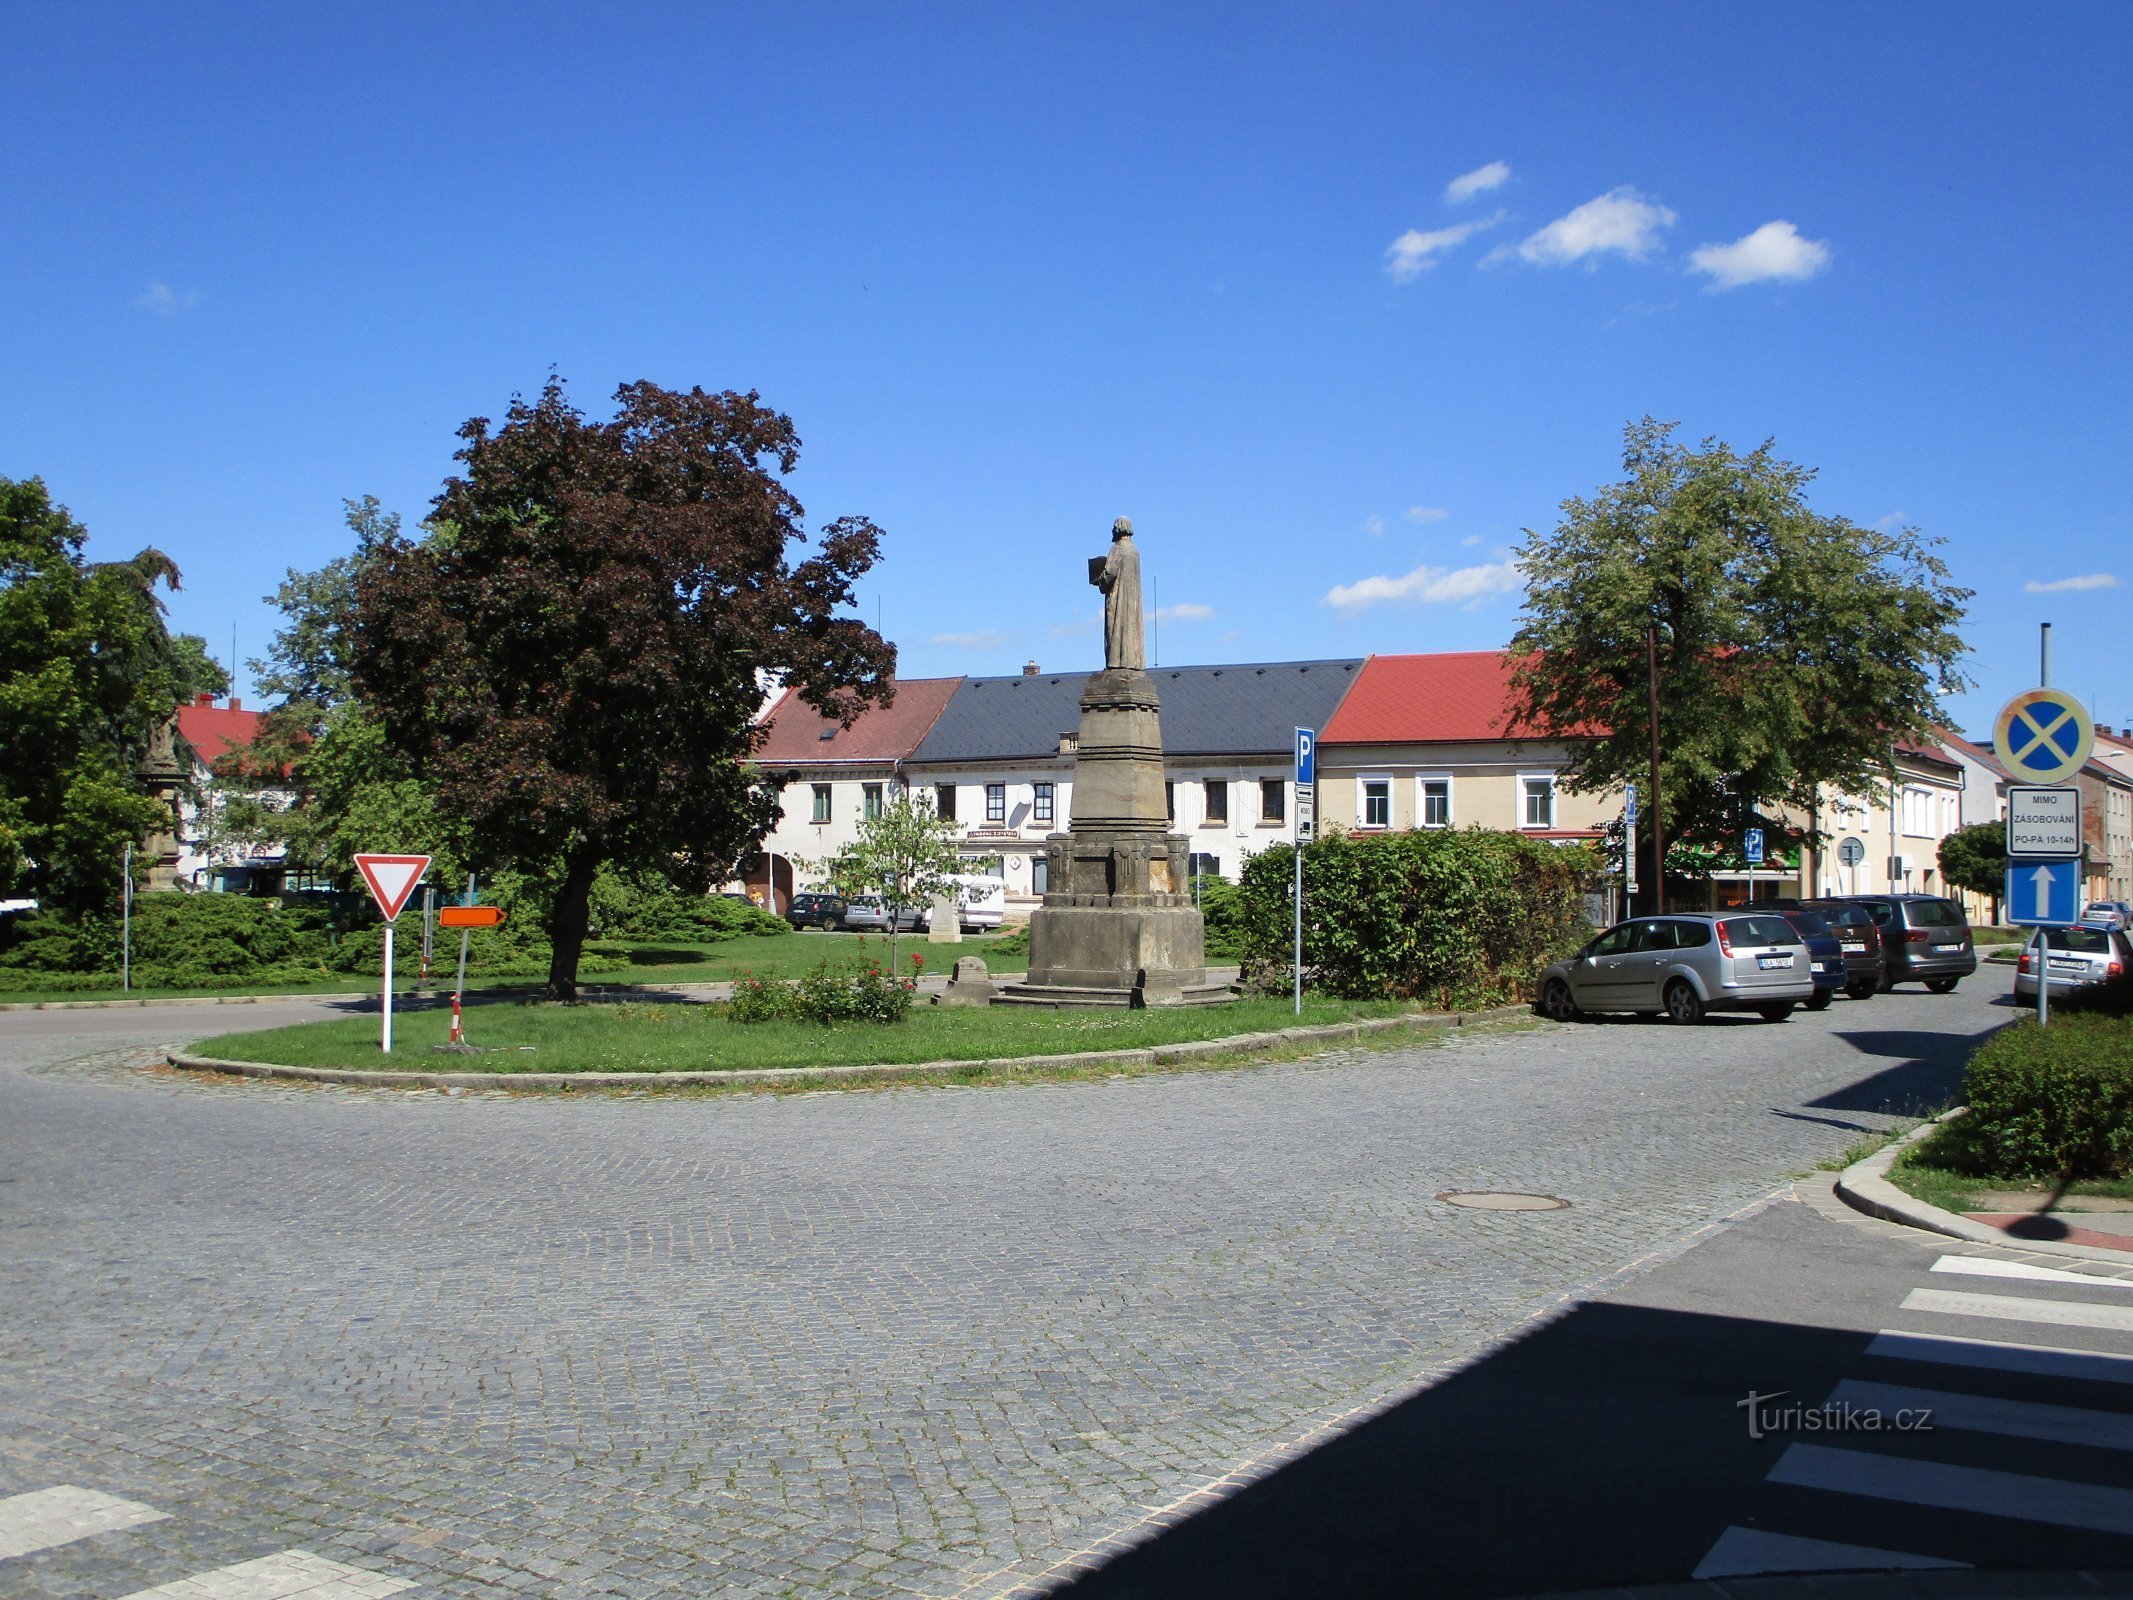 Piazza Hus con il monumento a M. Jan Hus (Nechanice, 18.8.2019/XNUMX/XNUMX)